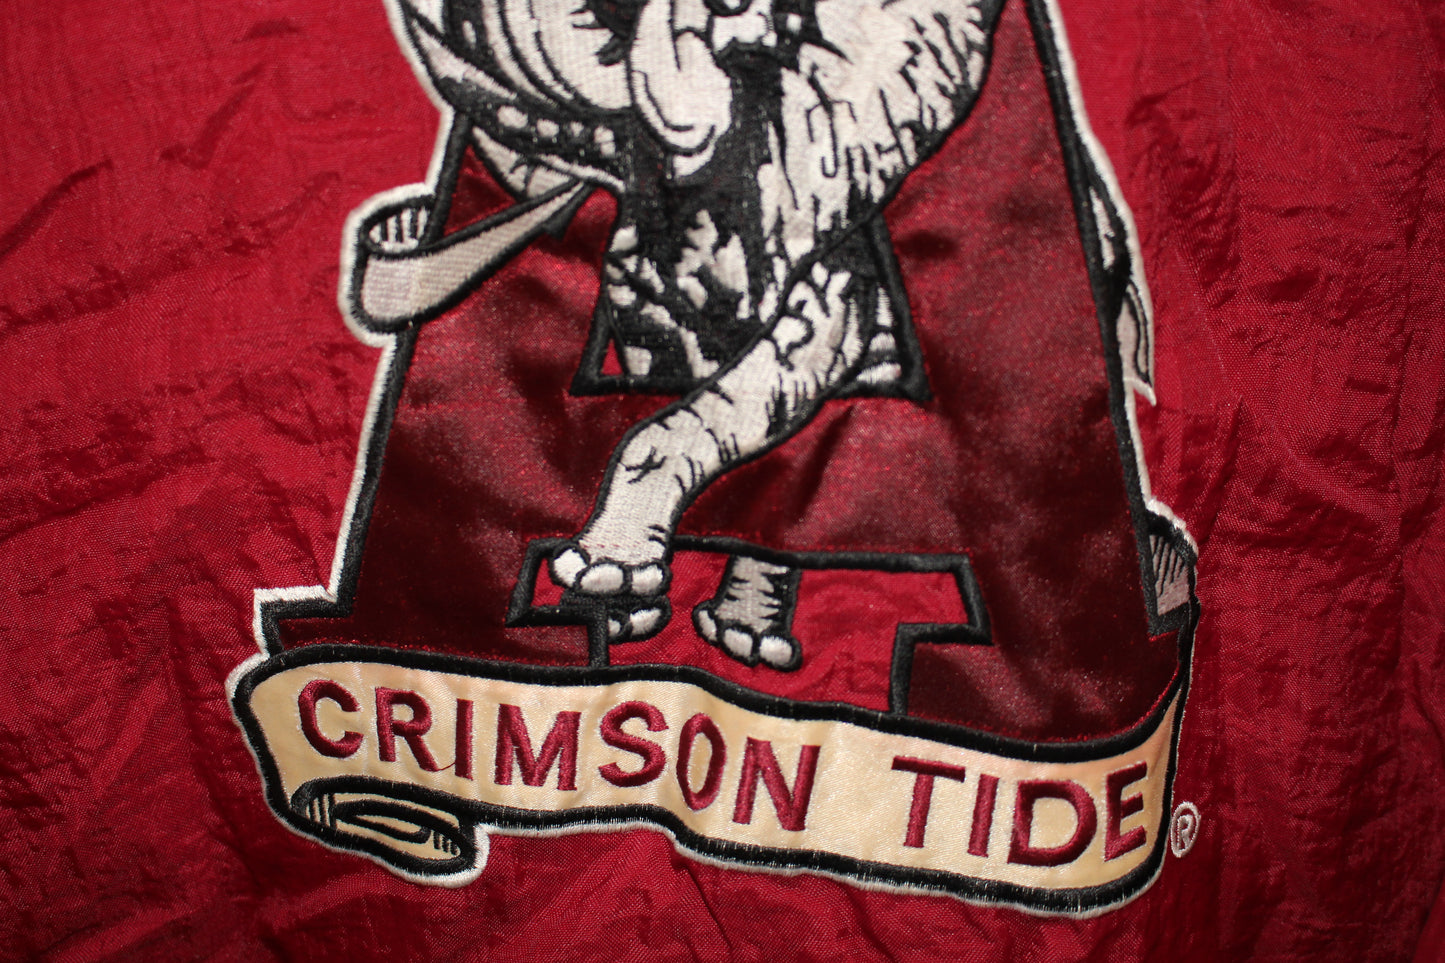 Alabama Crimson Tide Starter (M)